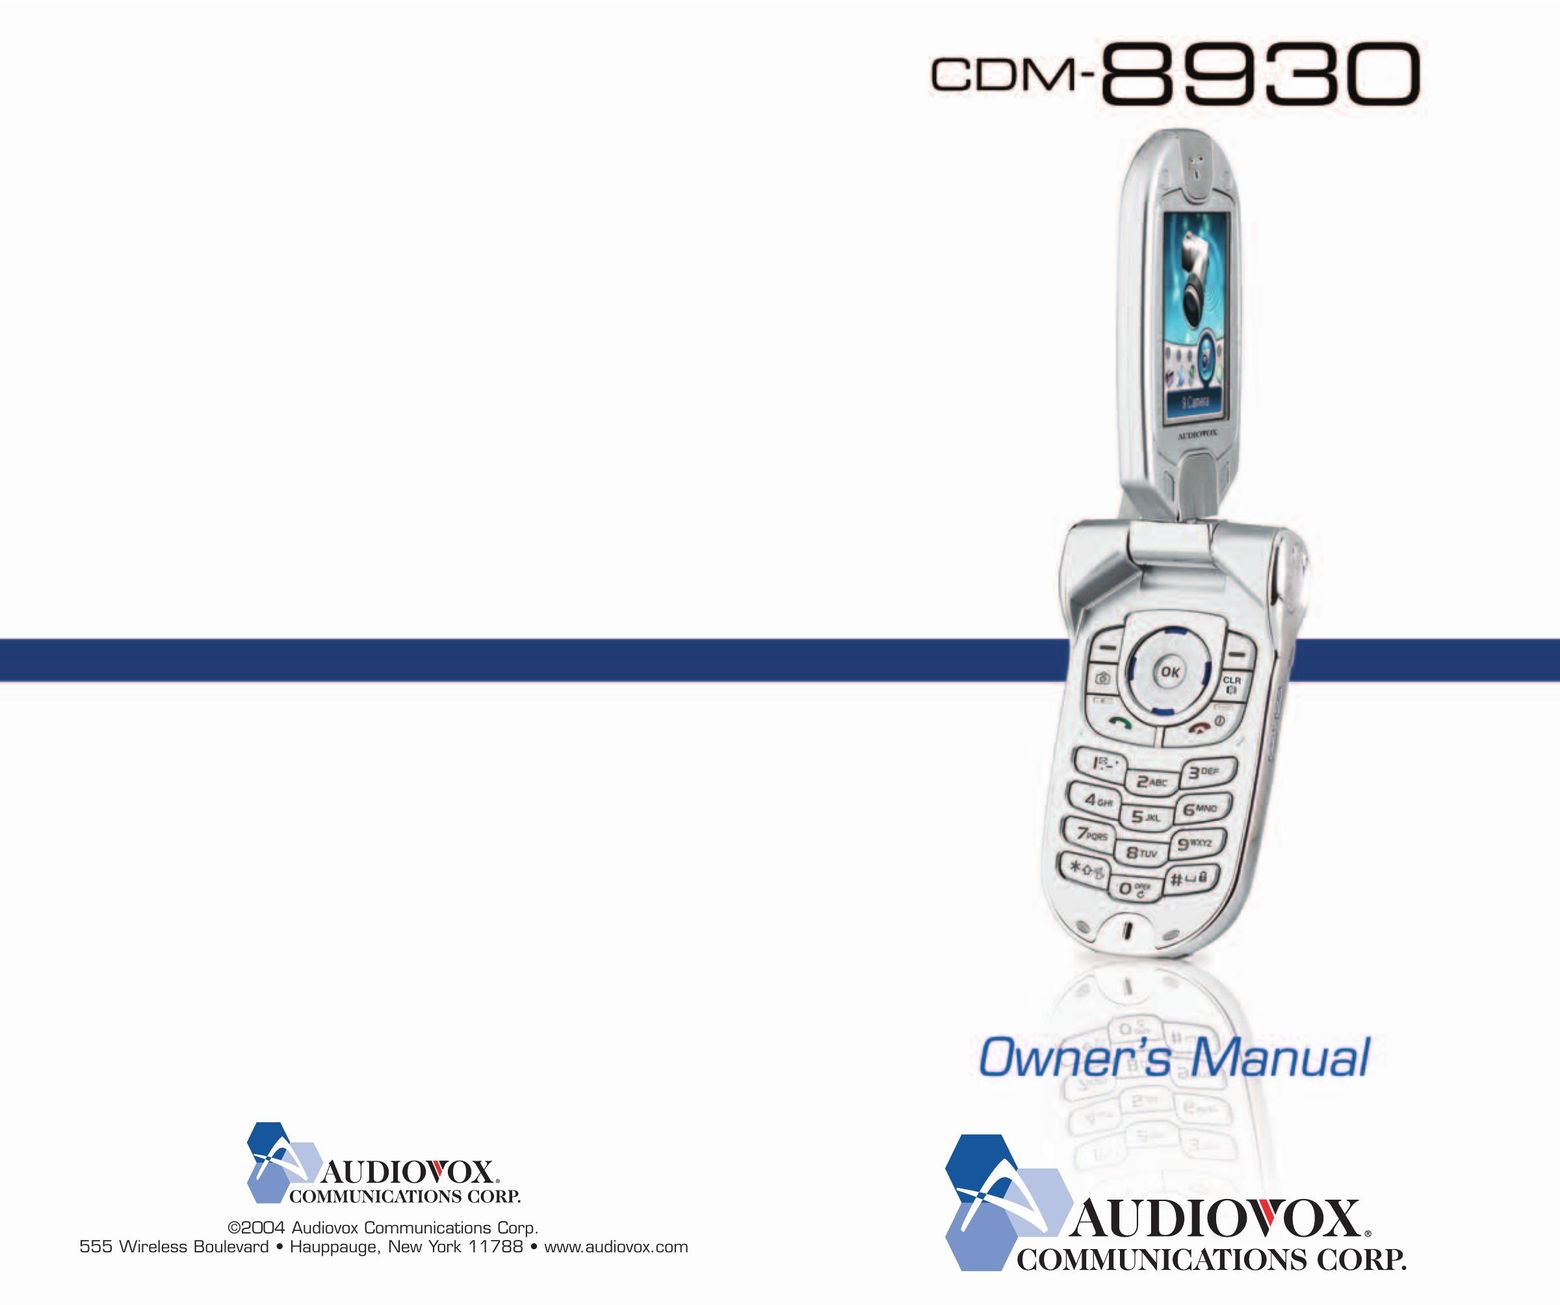 Audiovox CDM-8930 Cell Phone User Manual